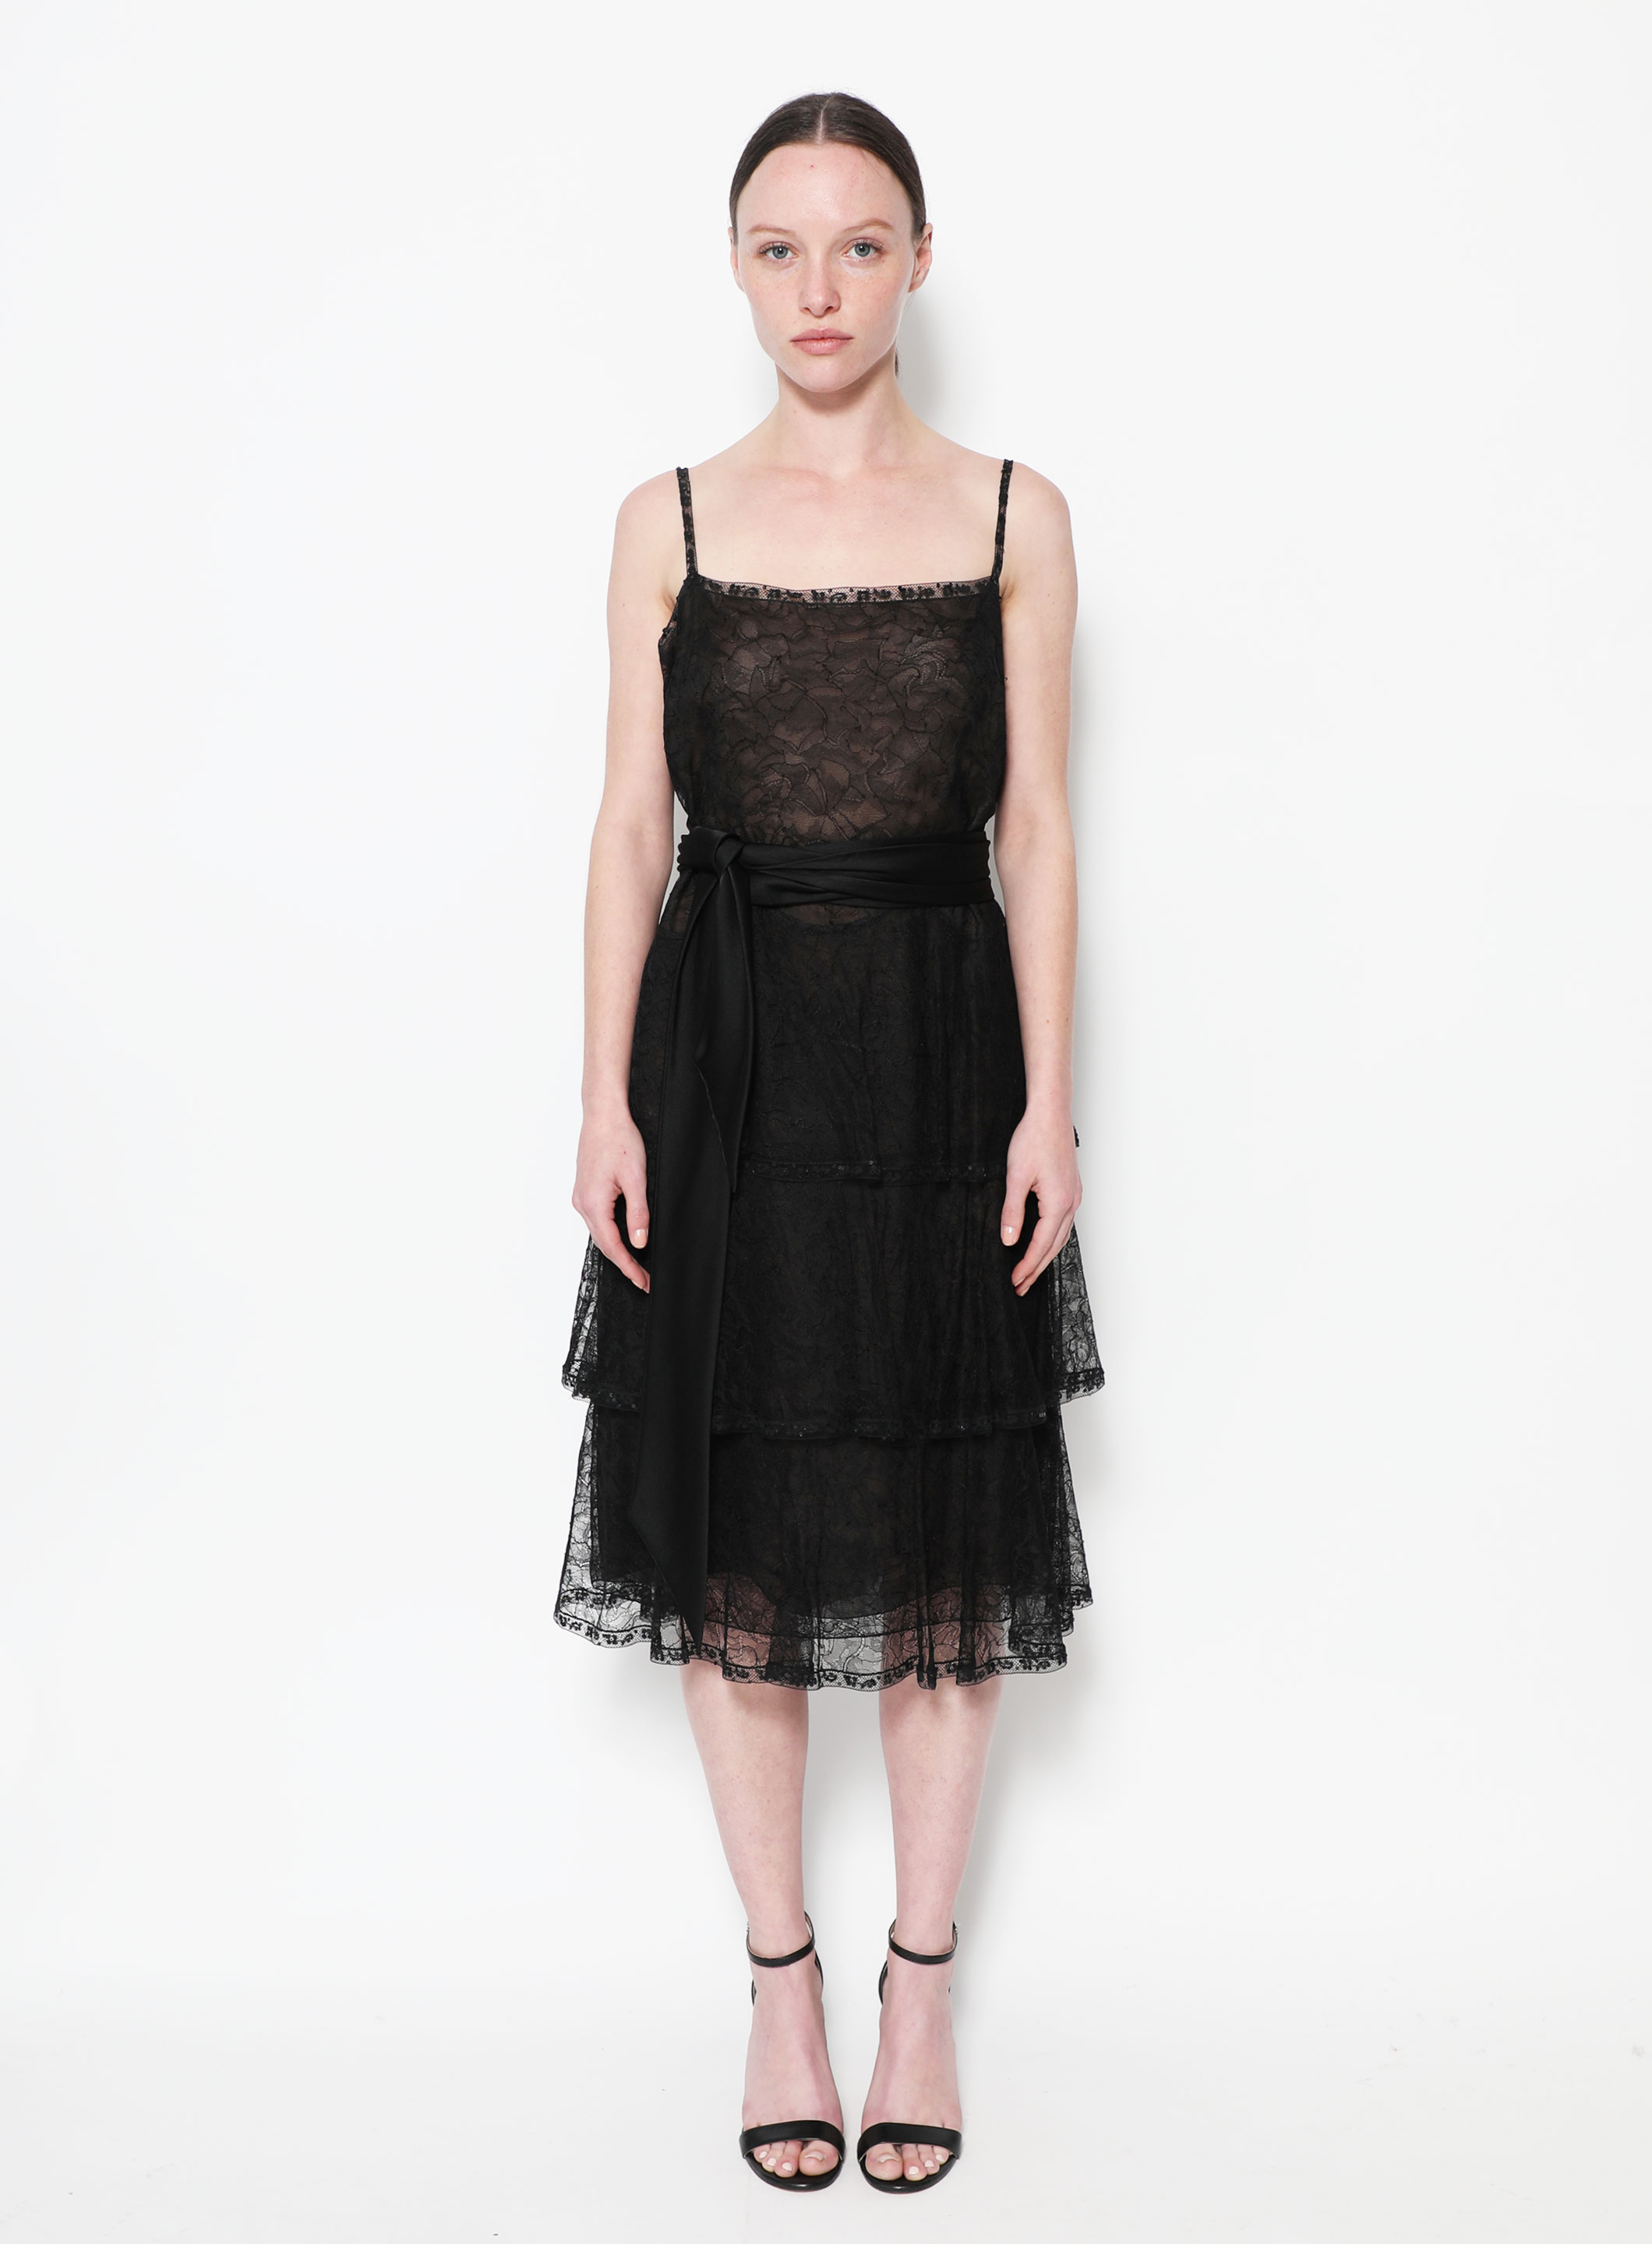 LVMH Fashion Group 100% Silk Ruffle Sleeveless Dress Black Sz 40